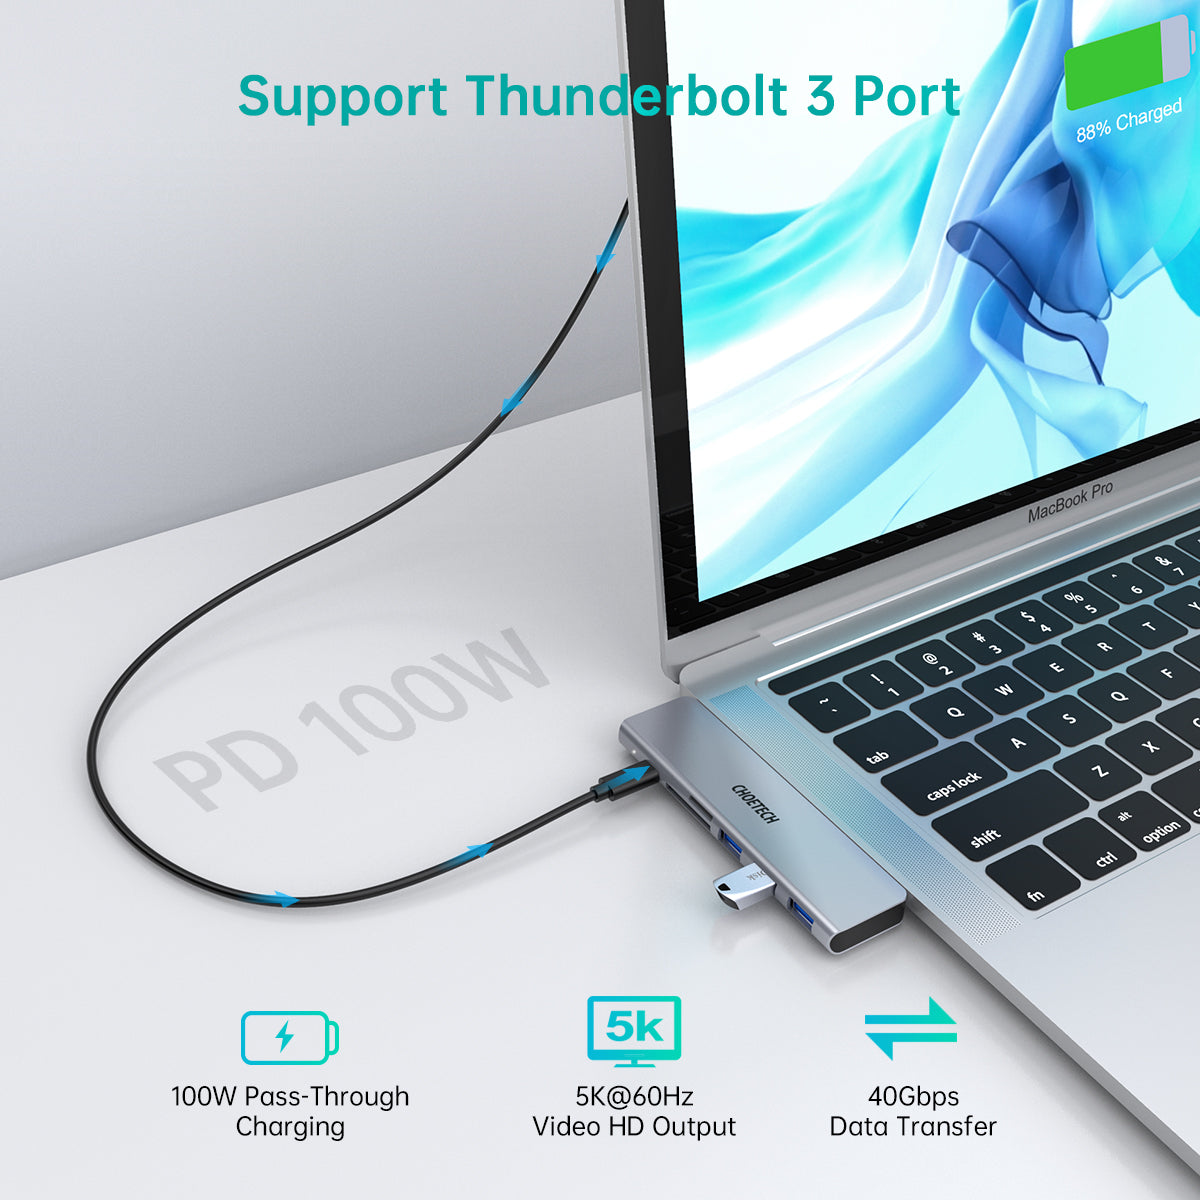 HUB-M23 MacBook Pro USB Adapter, CHOETECH 7 in 1 MacBook Air Adapter für MacBook Pro/Air 13-16”2016-2020, MacBook Zubehör mit Thunderbolt 3 100W PD Port, 3 USB 3.0 Ports, USB 2.0 Port, TF/SD Karte Leser